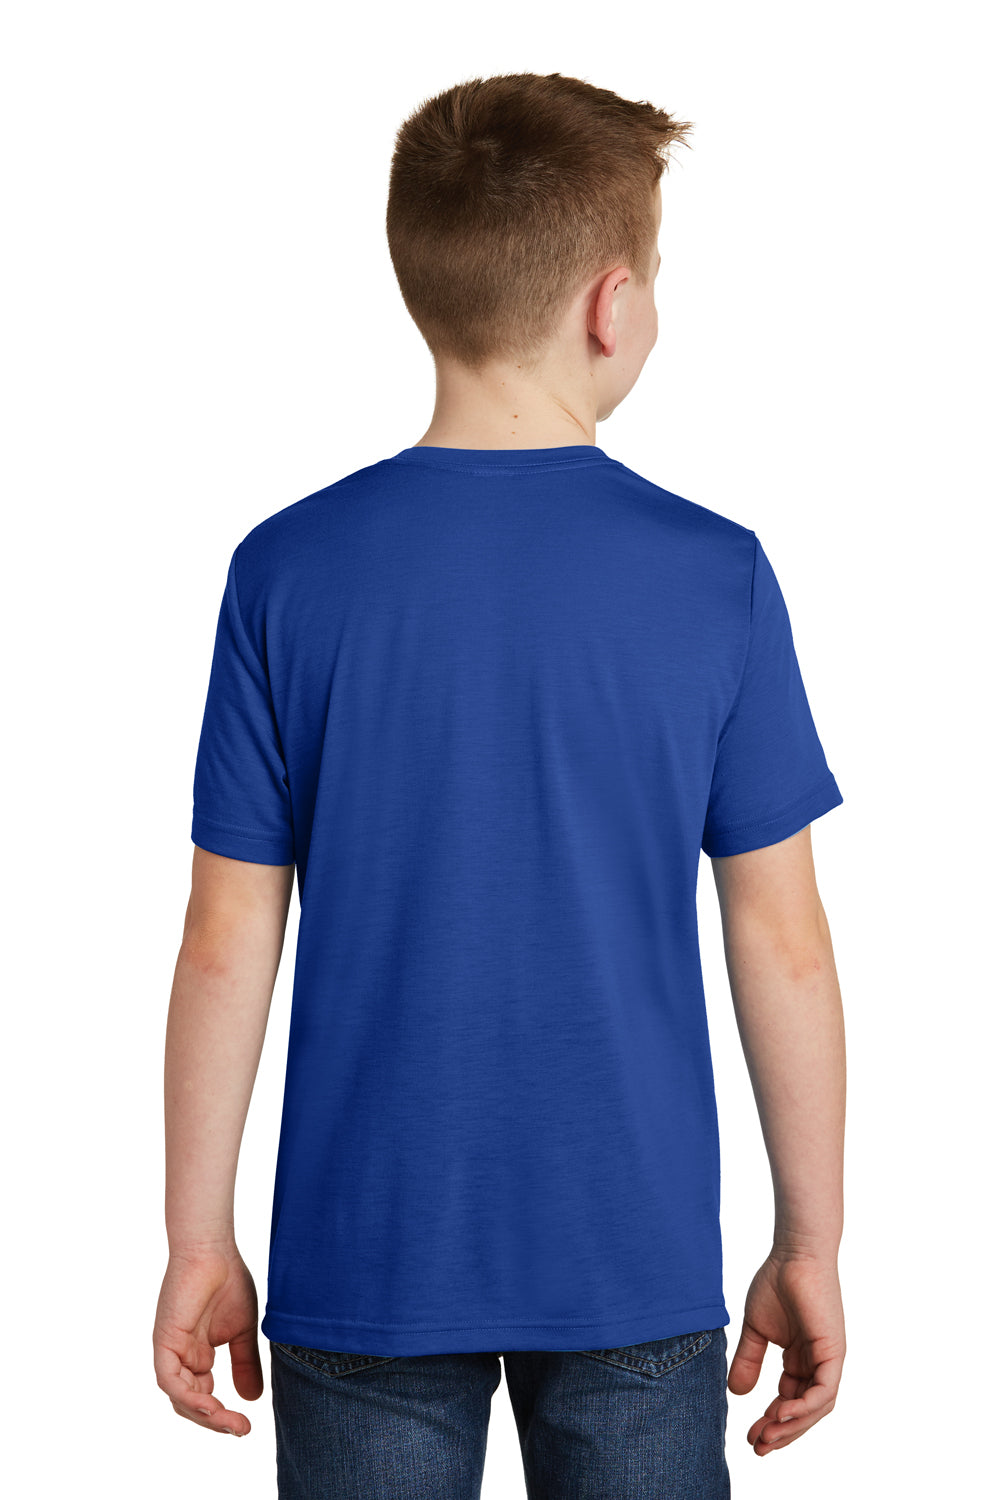 Sport-Tek YST450 Youth Competitor Moisture Wicking Short Sleeve Crewneck T-Shirt Royal Blue Back